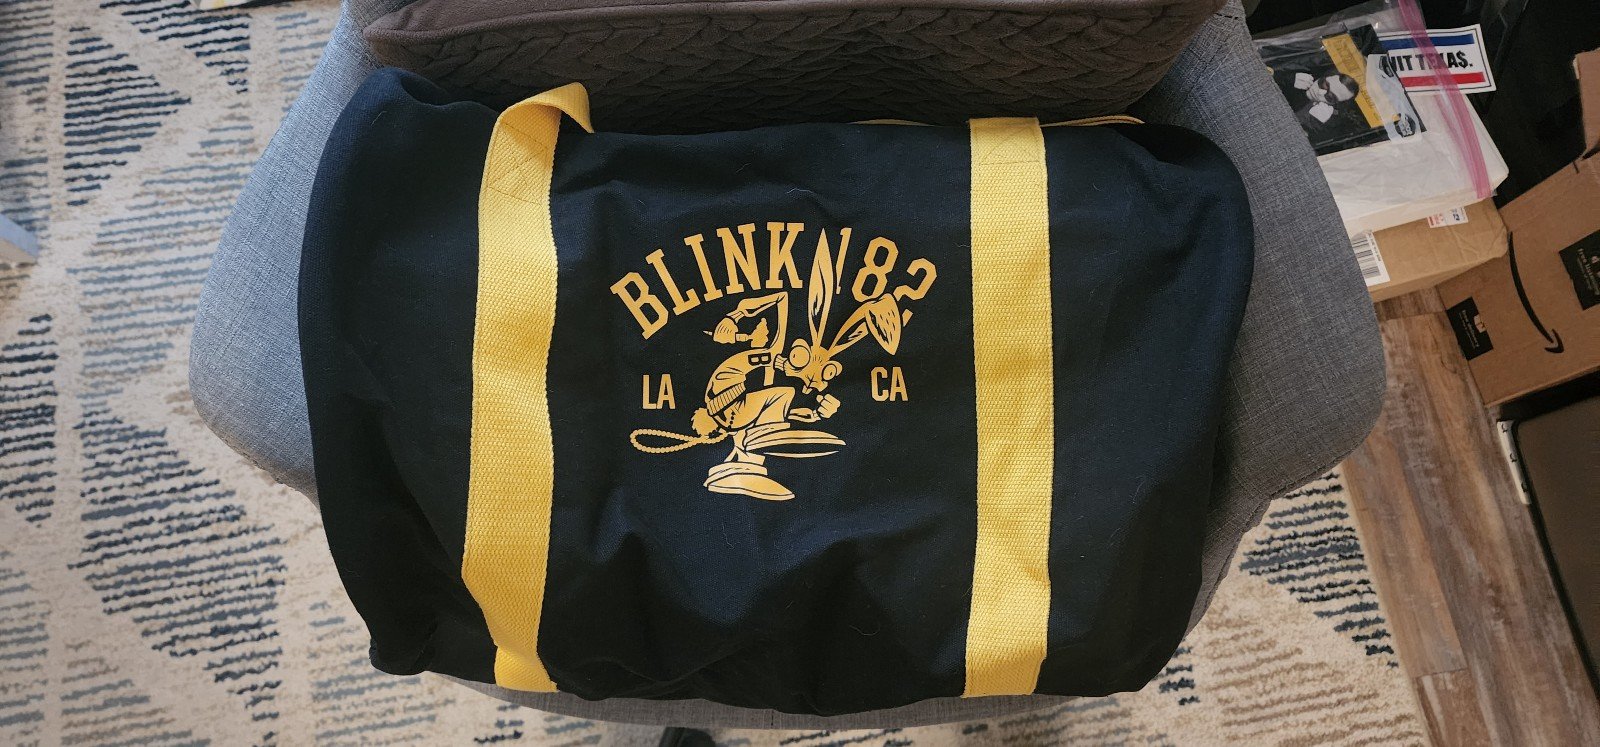 Blink 182 Duffle Bag 9qZlj2iAk